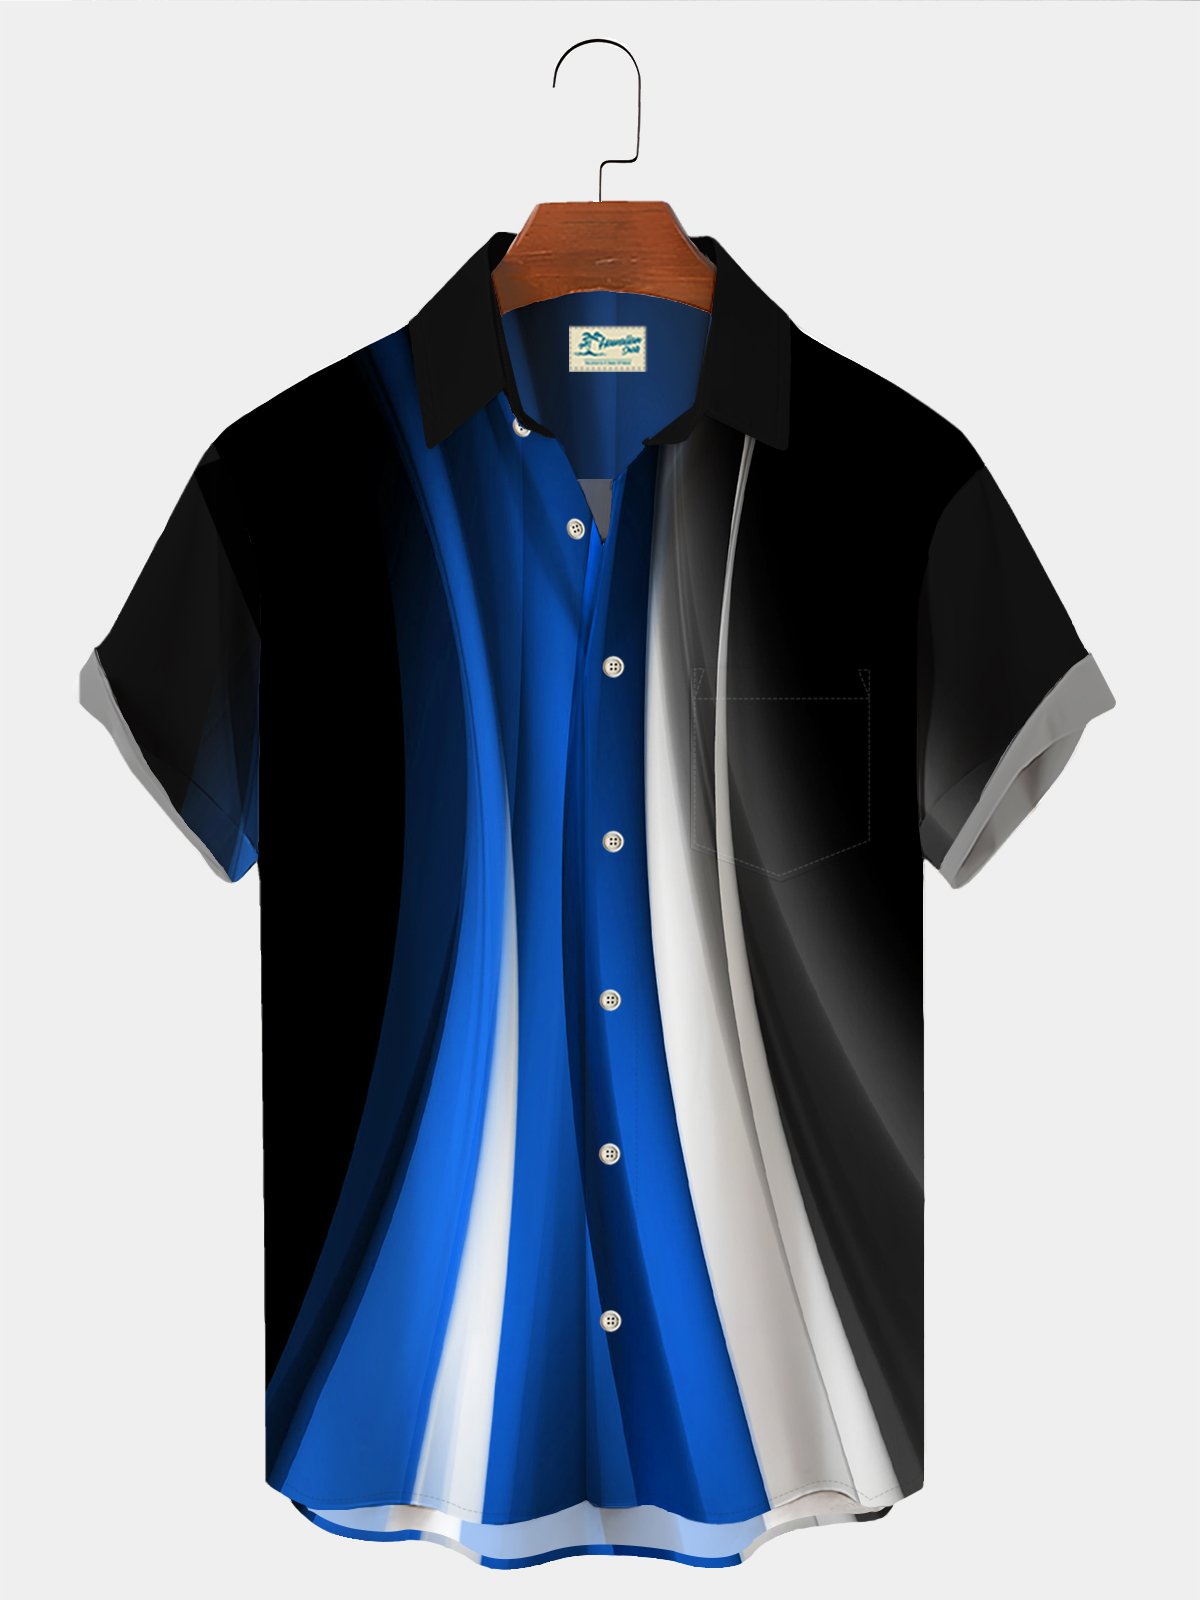 Royaura Black Art Gradient Print Men's Black Chest Bag Shirt Plus Size Shirt